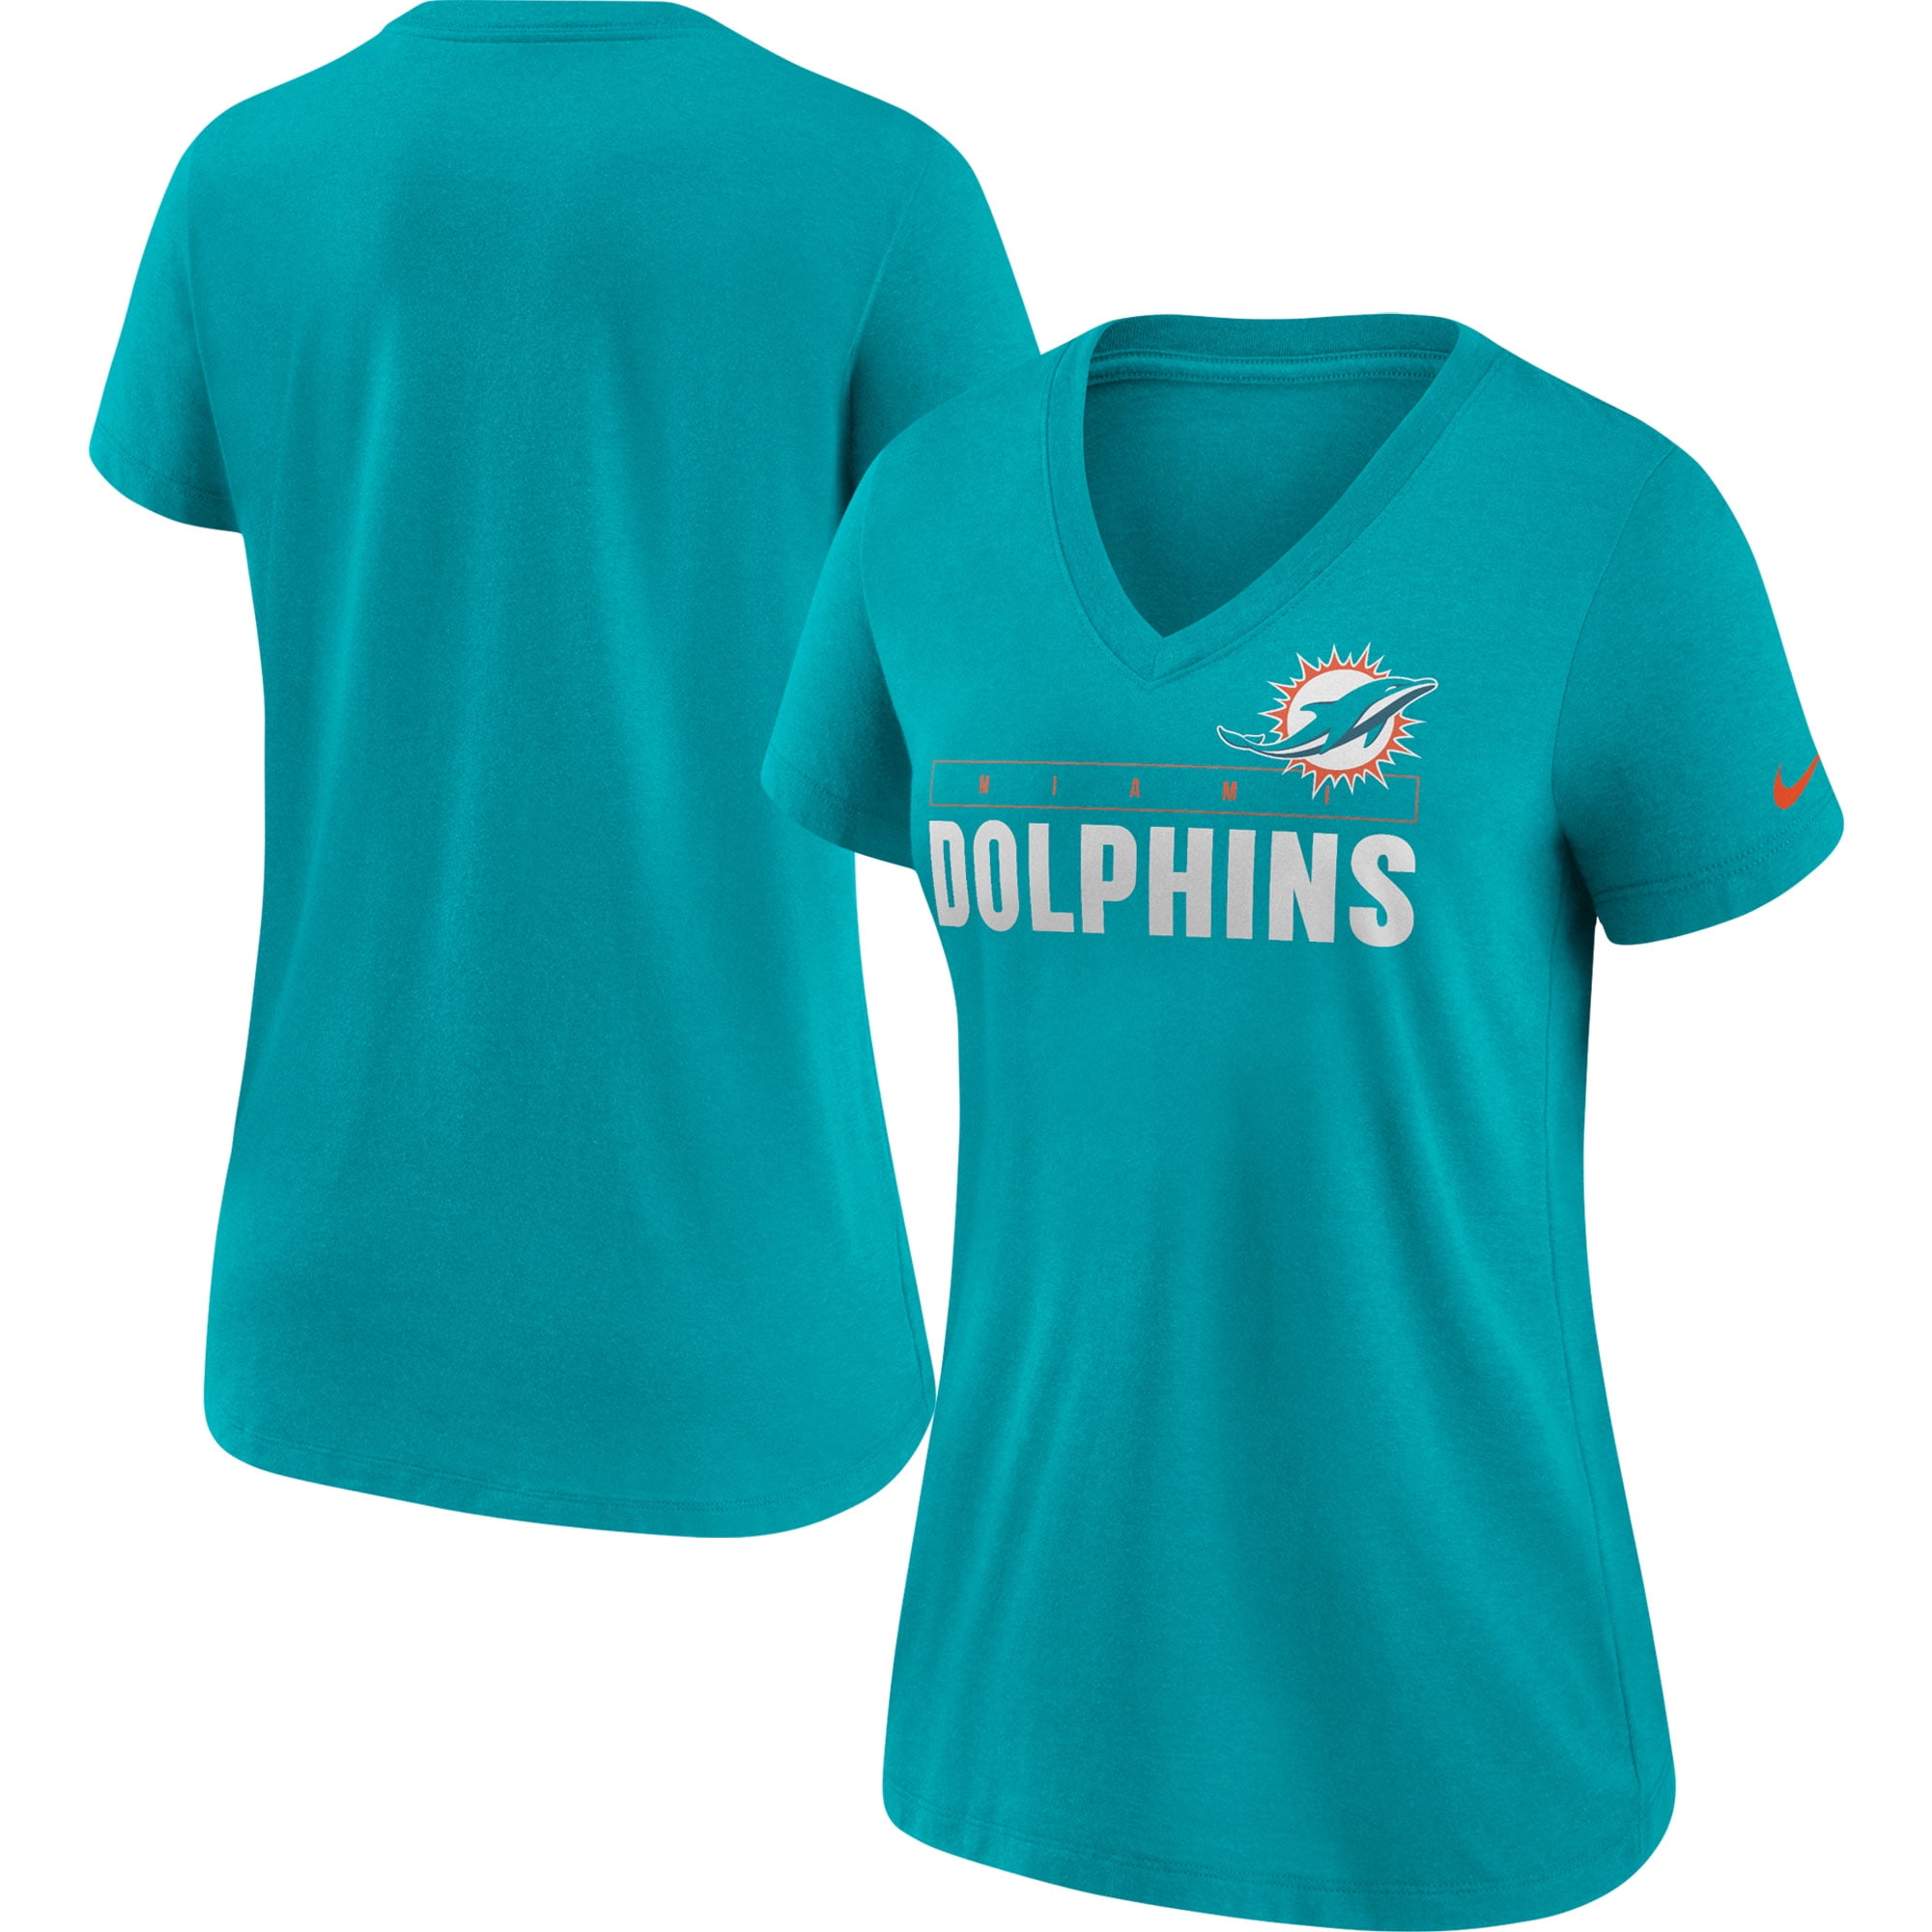 miami dolphins shirt womens